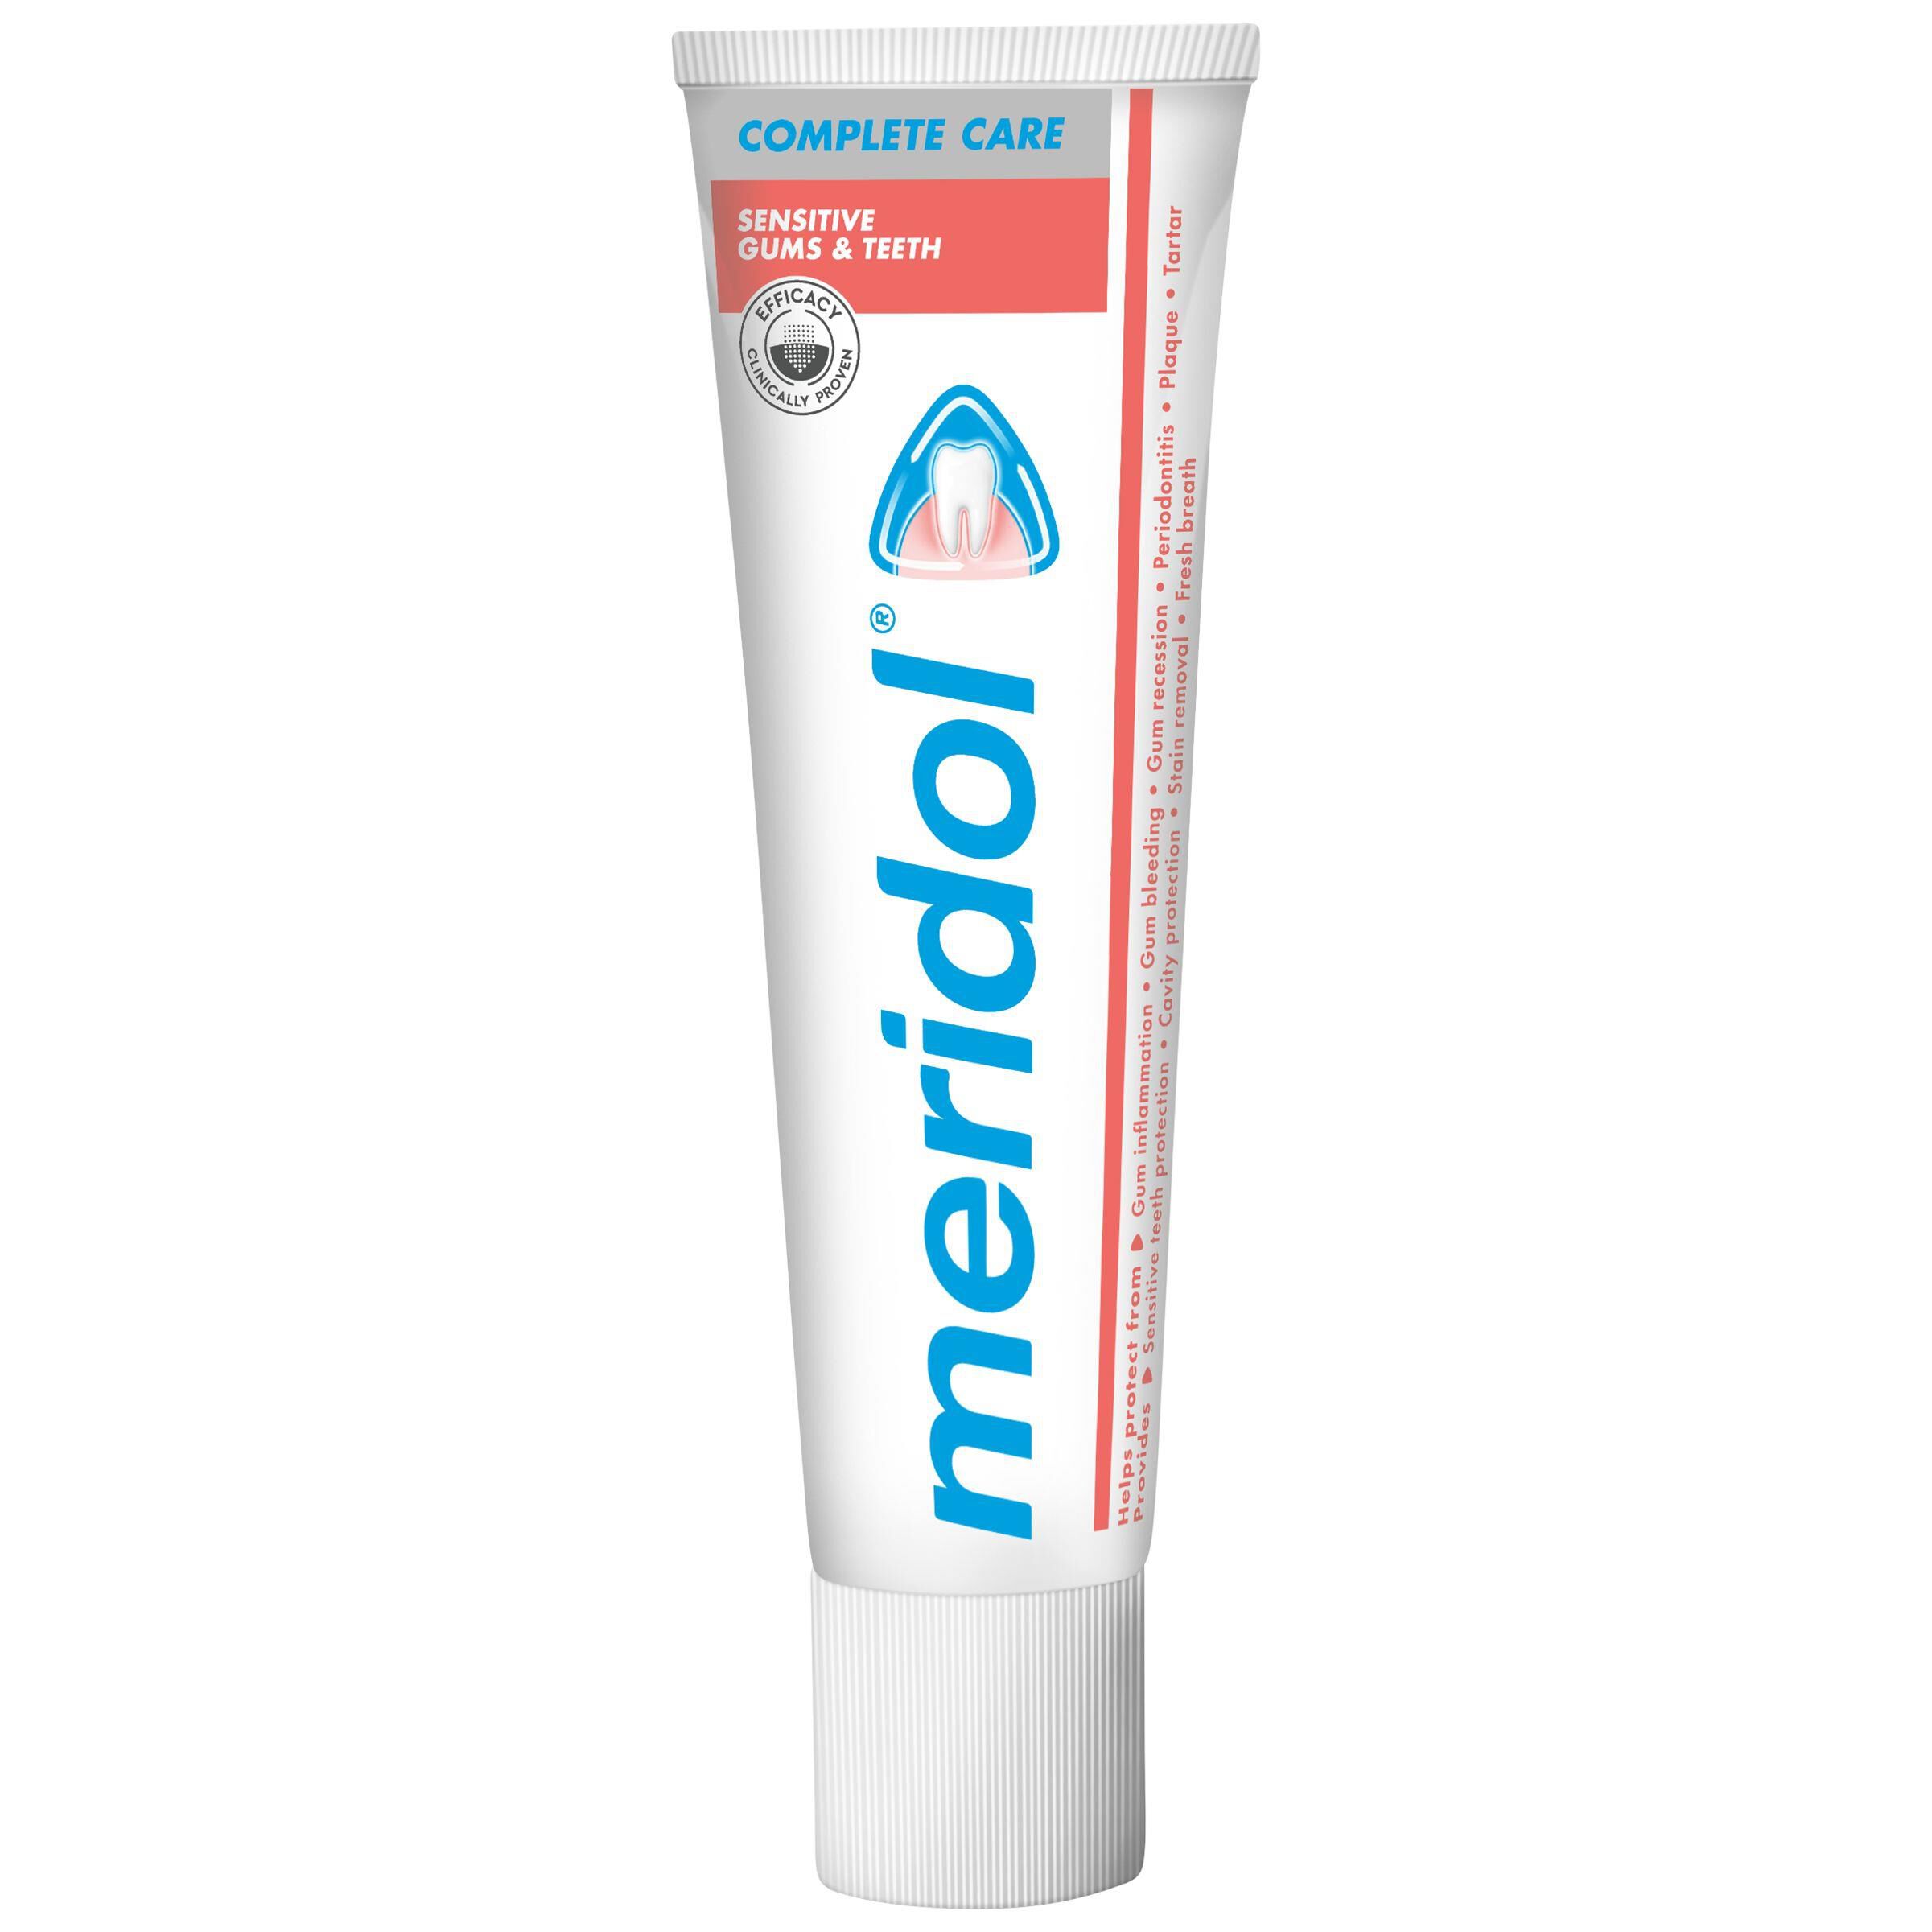 Meridol Complete Care Sensitive зубная паста, 75 мл